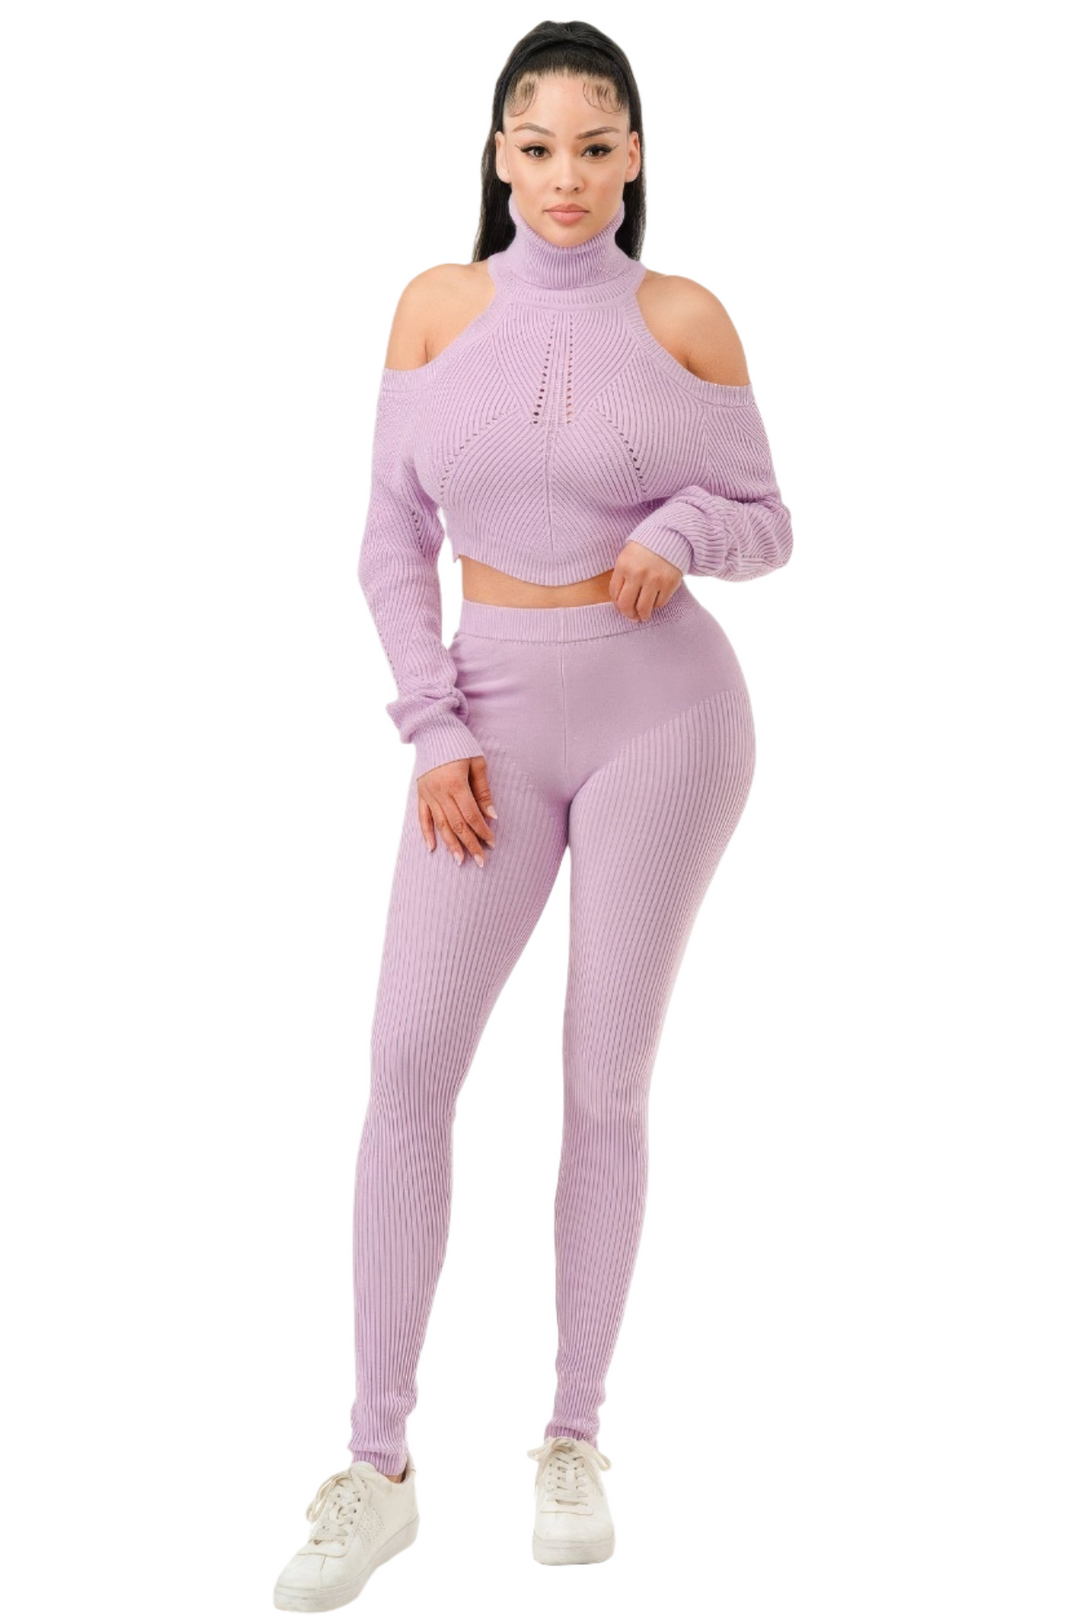 Knit Top & Pants Set in Lilac | Open Shoulder Crop Blouse | Pantie Design | Stretchy Fit